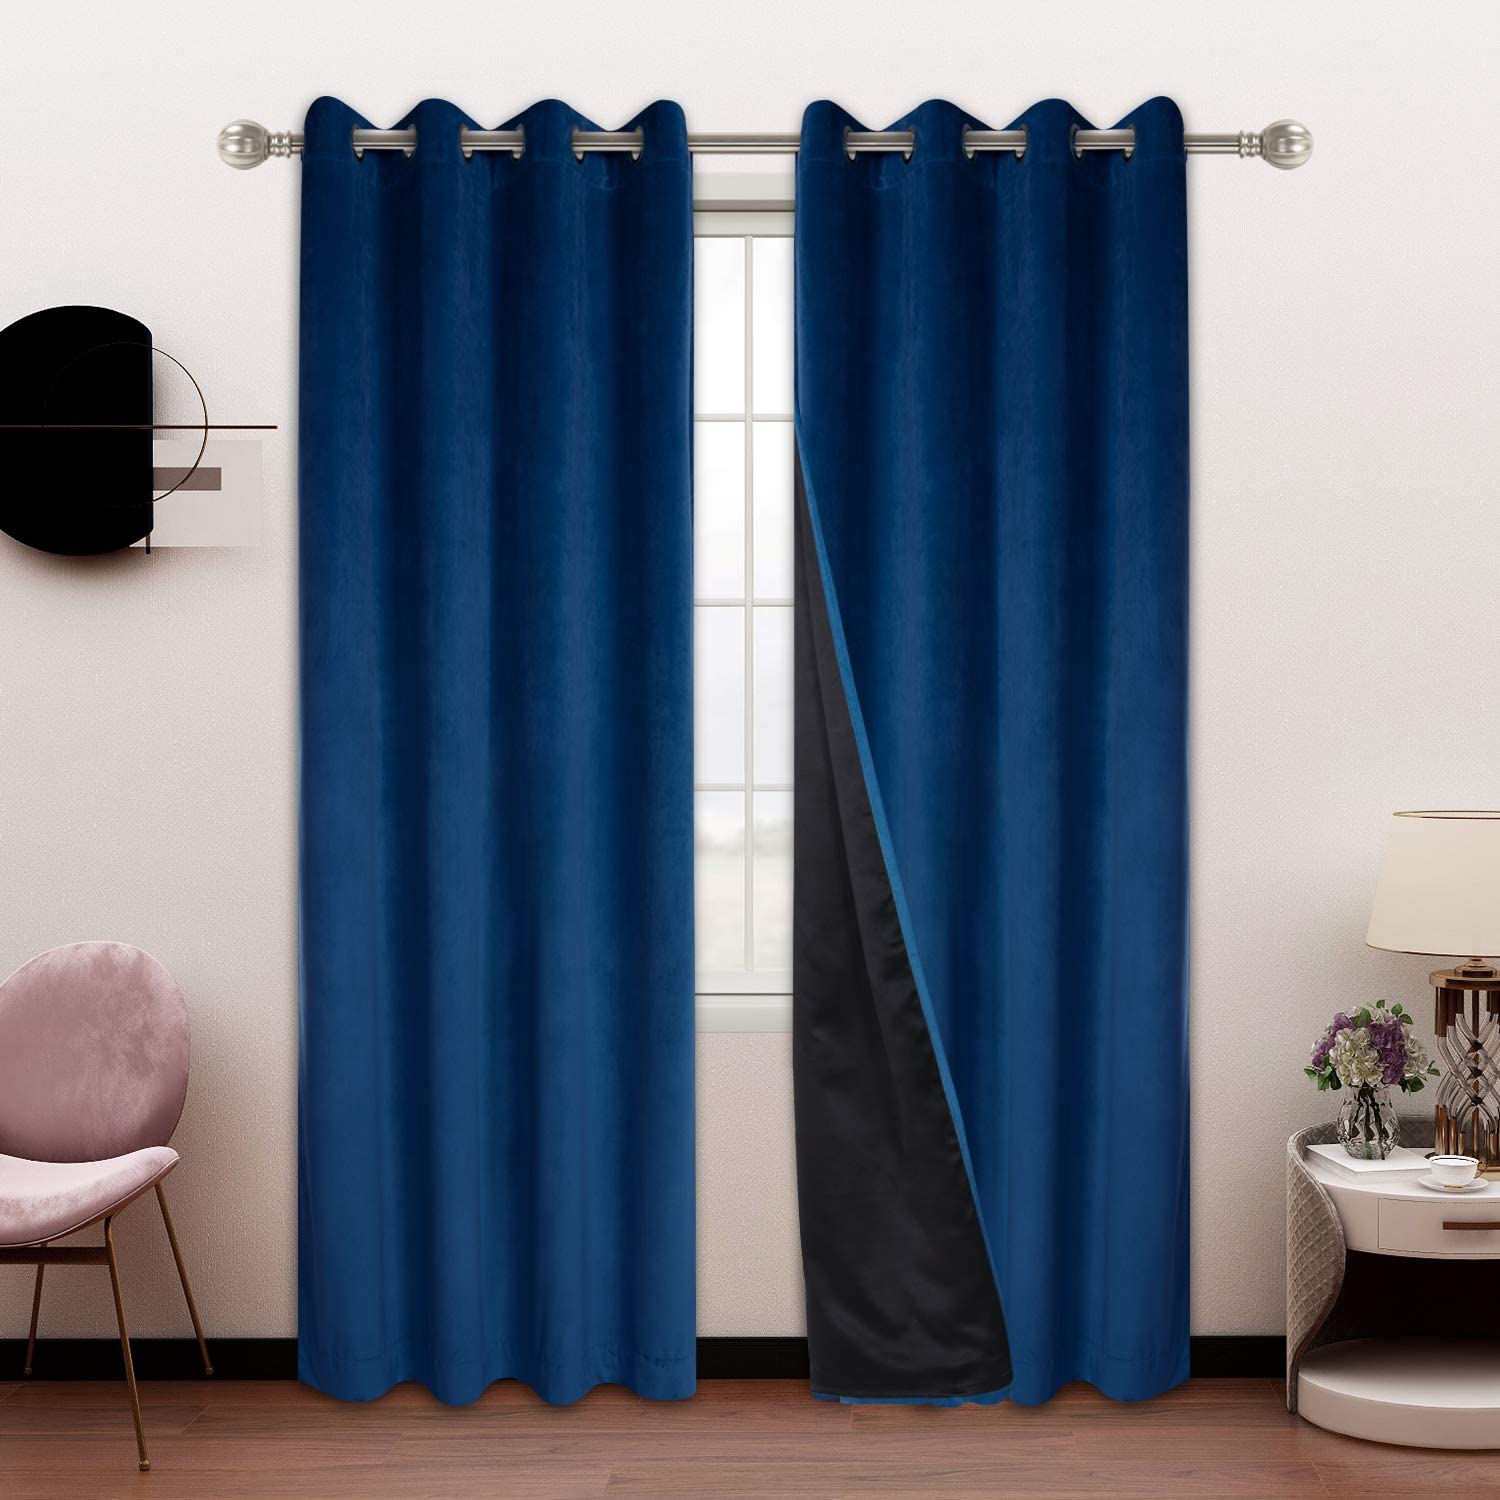 Plain Velvet Eyelet Curtains With black lining - Navy blue - DecorStudio - PLAIN DYED CURTAINS